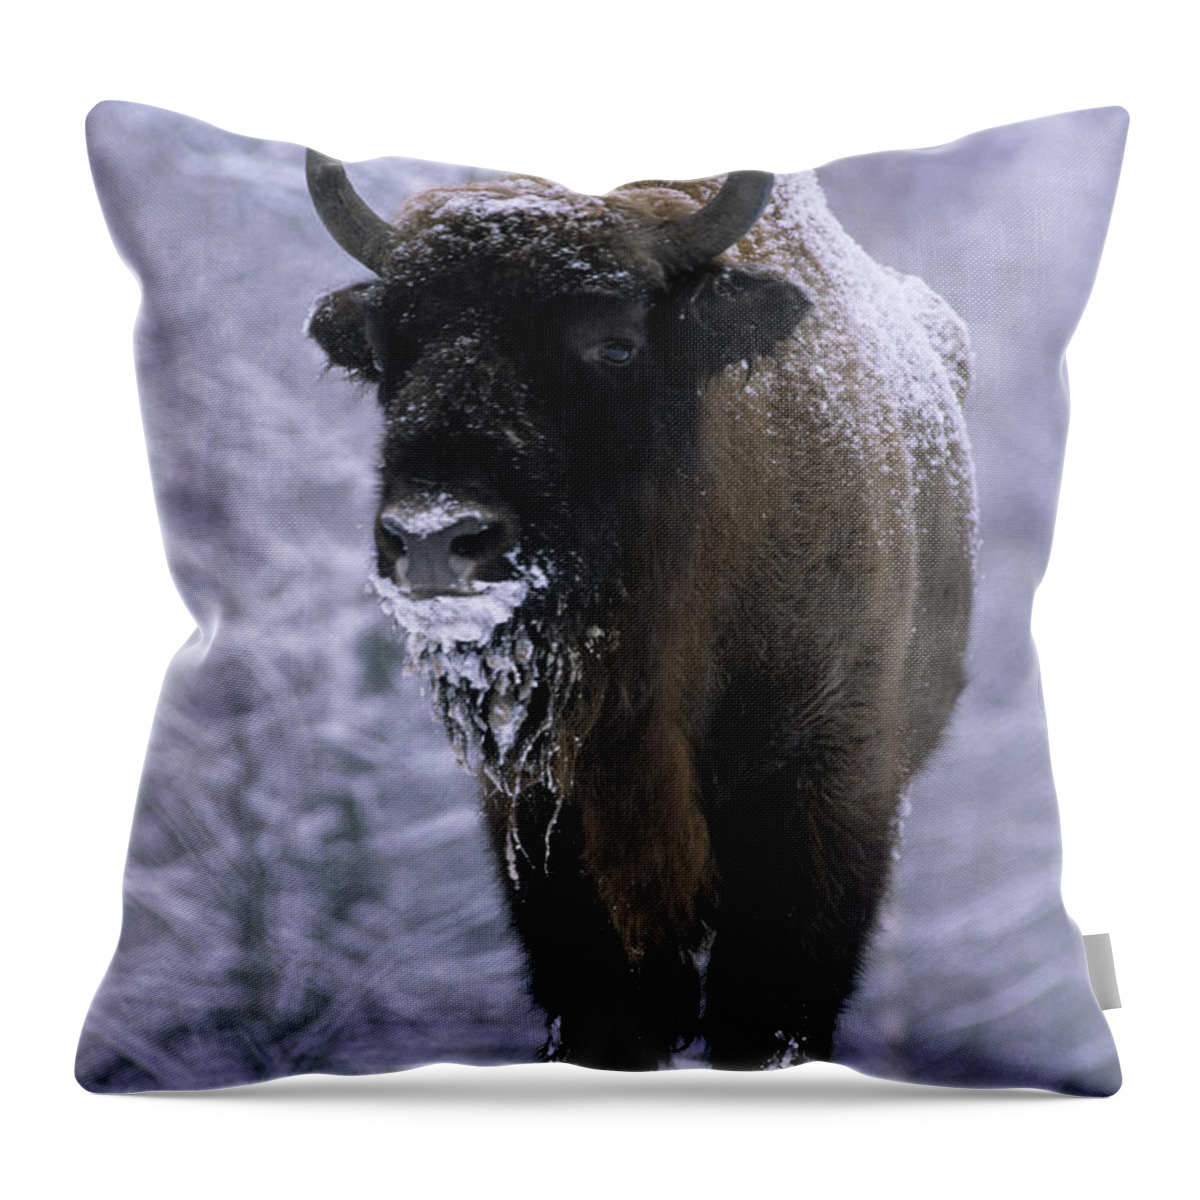 Fn Throw Pillow featuring the photograph European Bison Bison Bonasus In Snow by Rinie Van Meurs